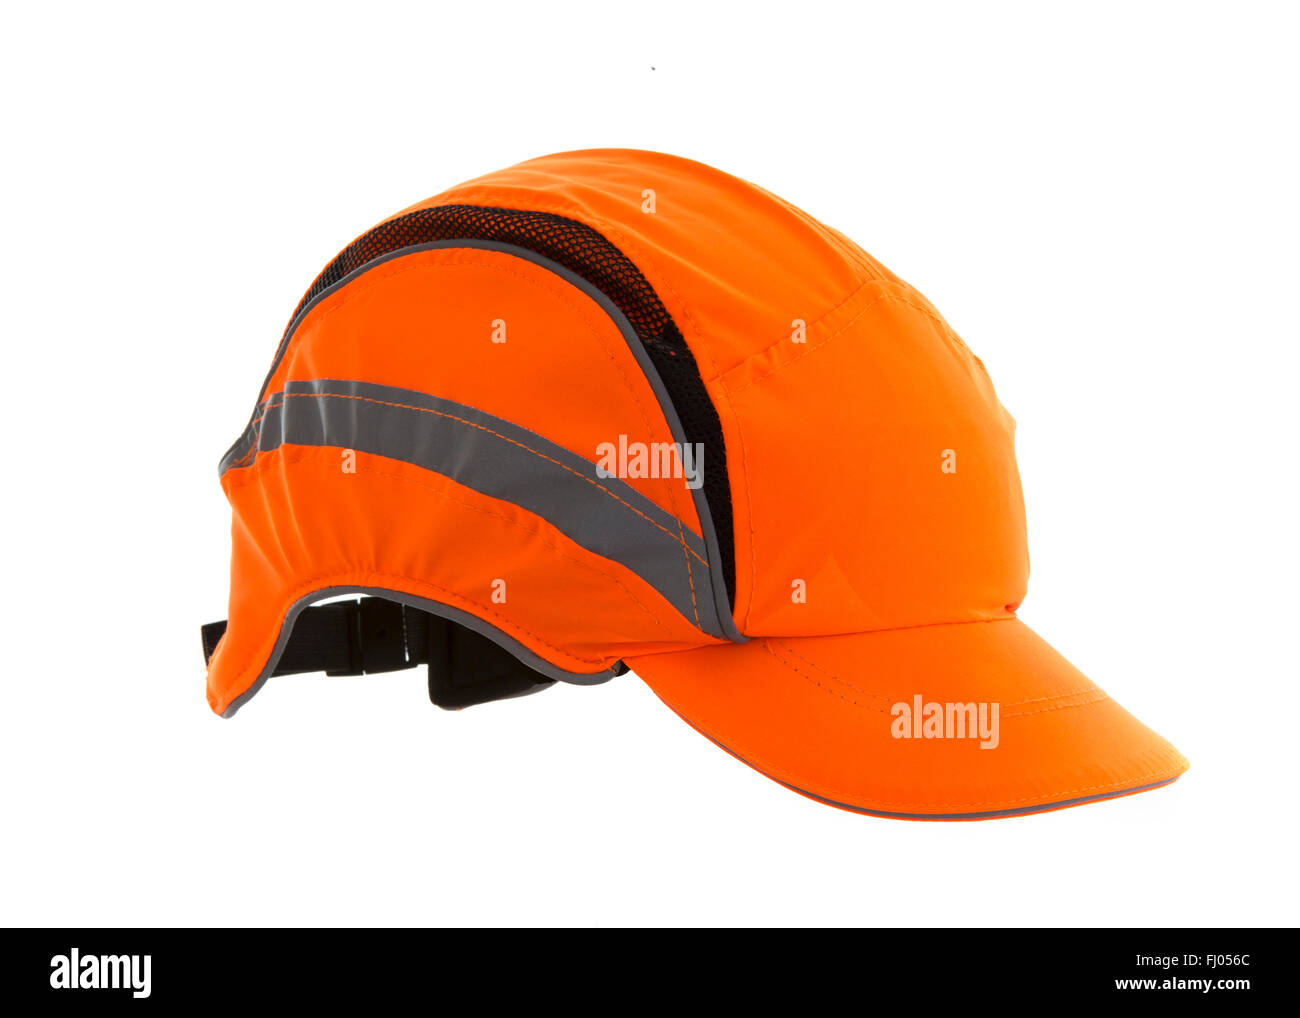 Orange Bump Cap Safety Hat on a White Background Stock Photo